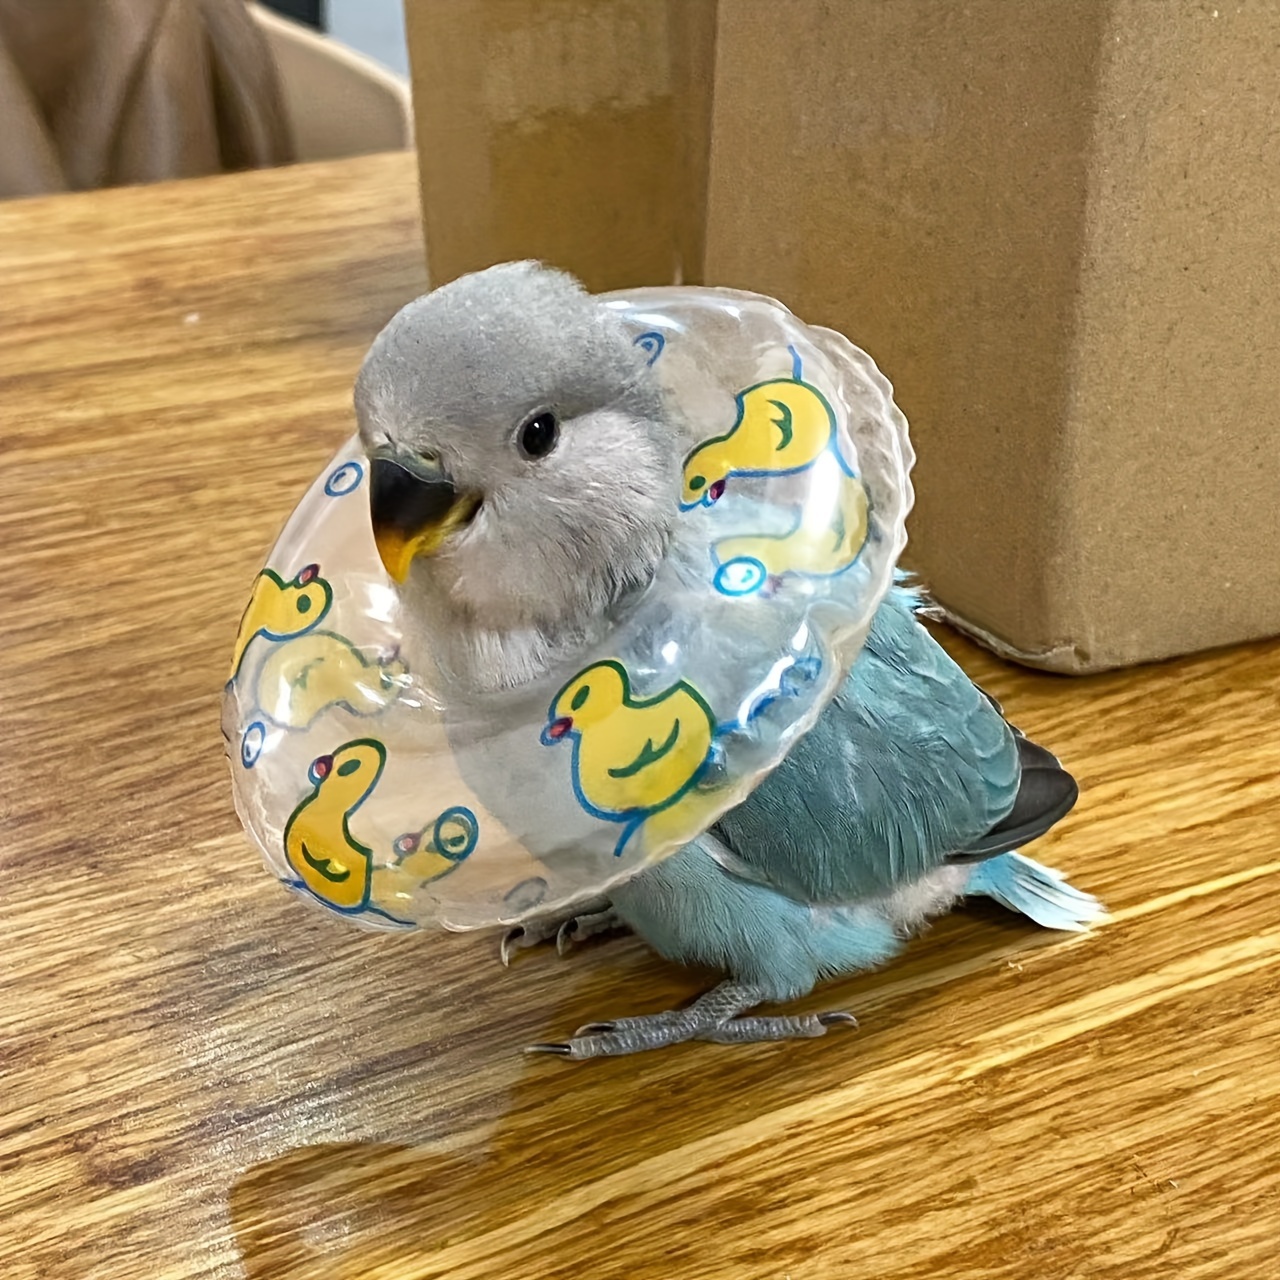 

5pcs Mini Inflatable Swim Ring Toy Set For Small Parrots, Pet Photoshoot Props, 3.54 Inch Diameter, Cute Duck Pattern Design, Random Colors Shipment